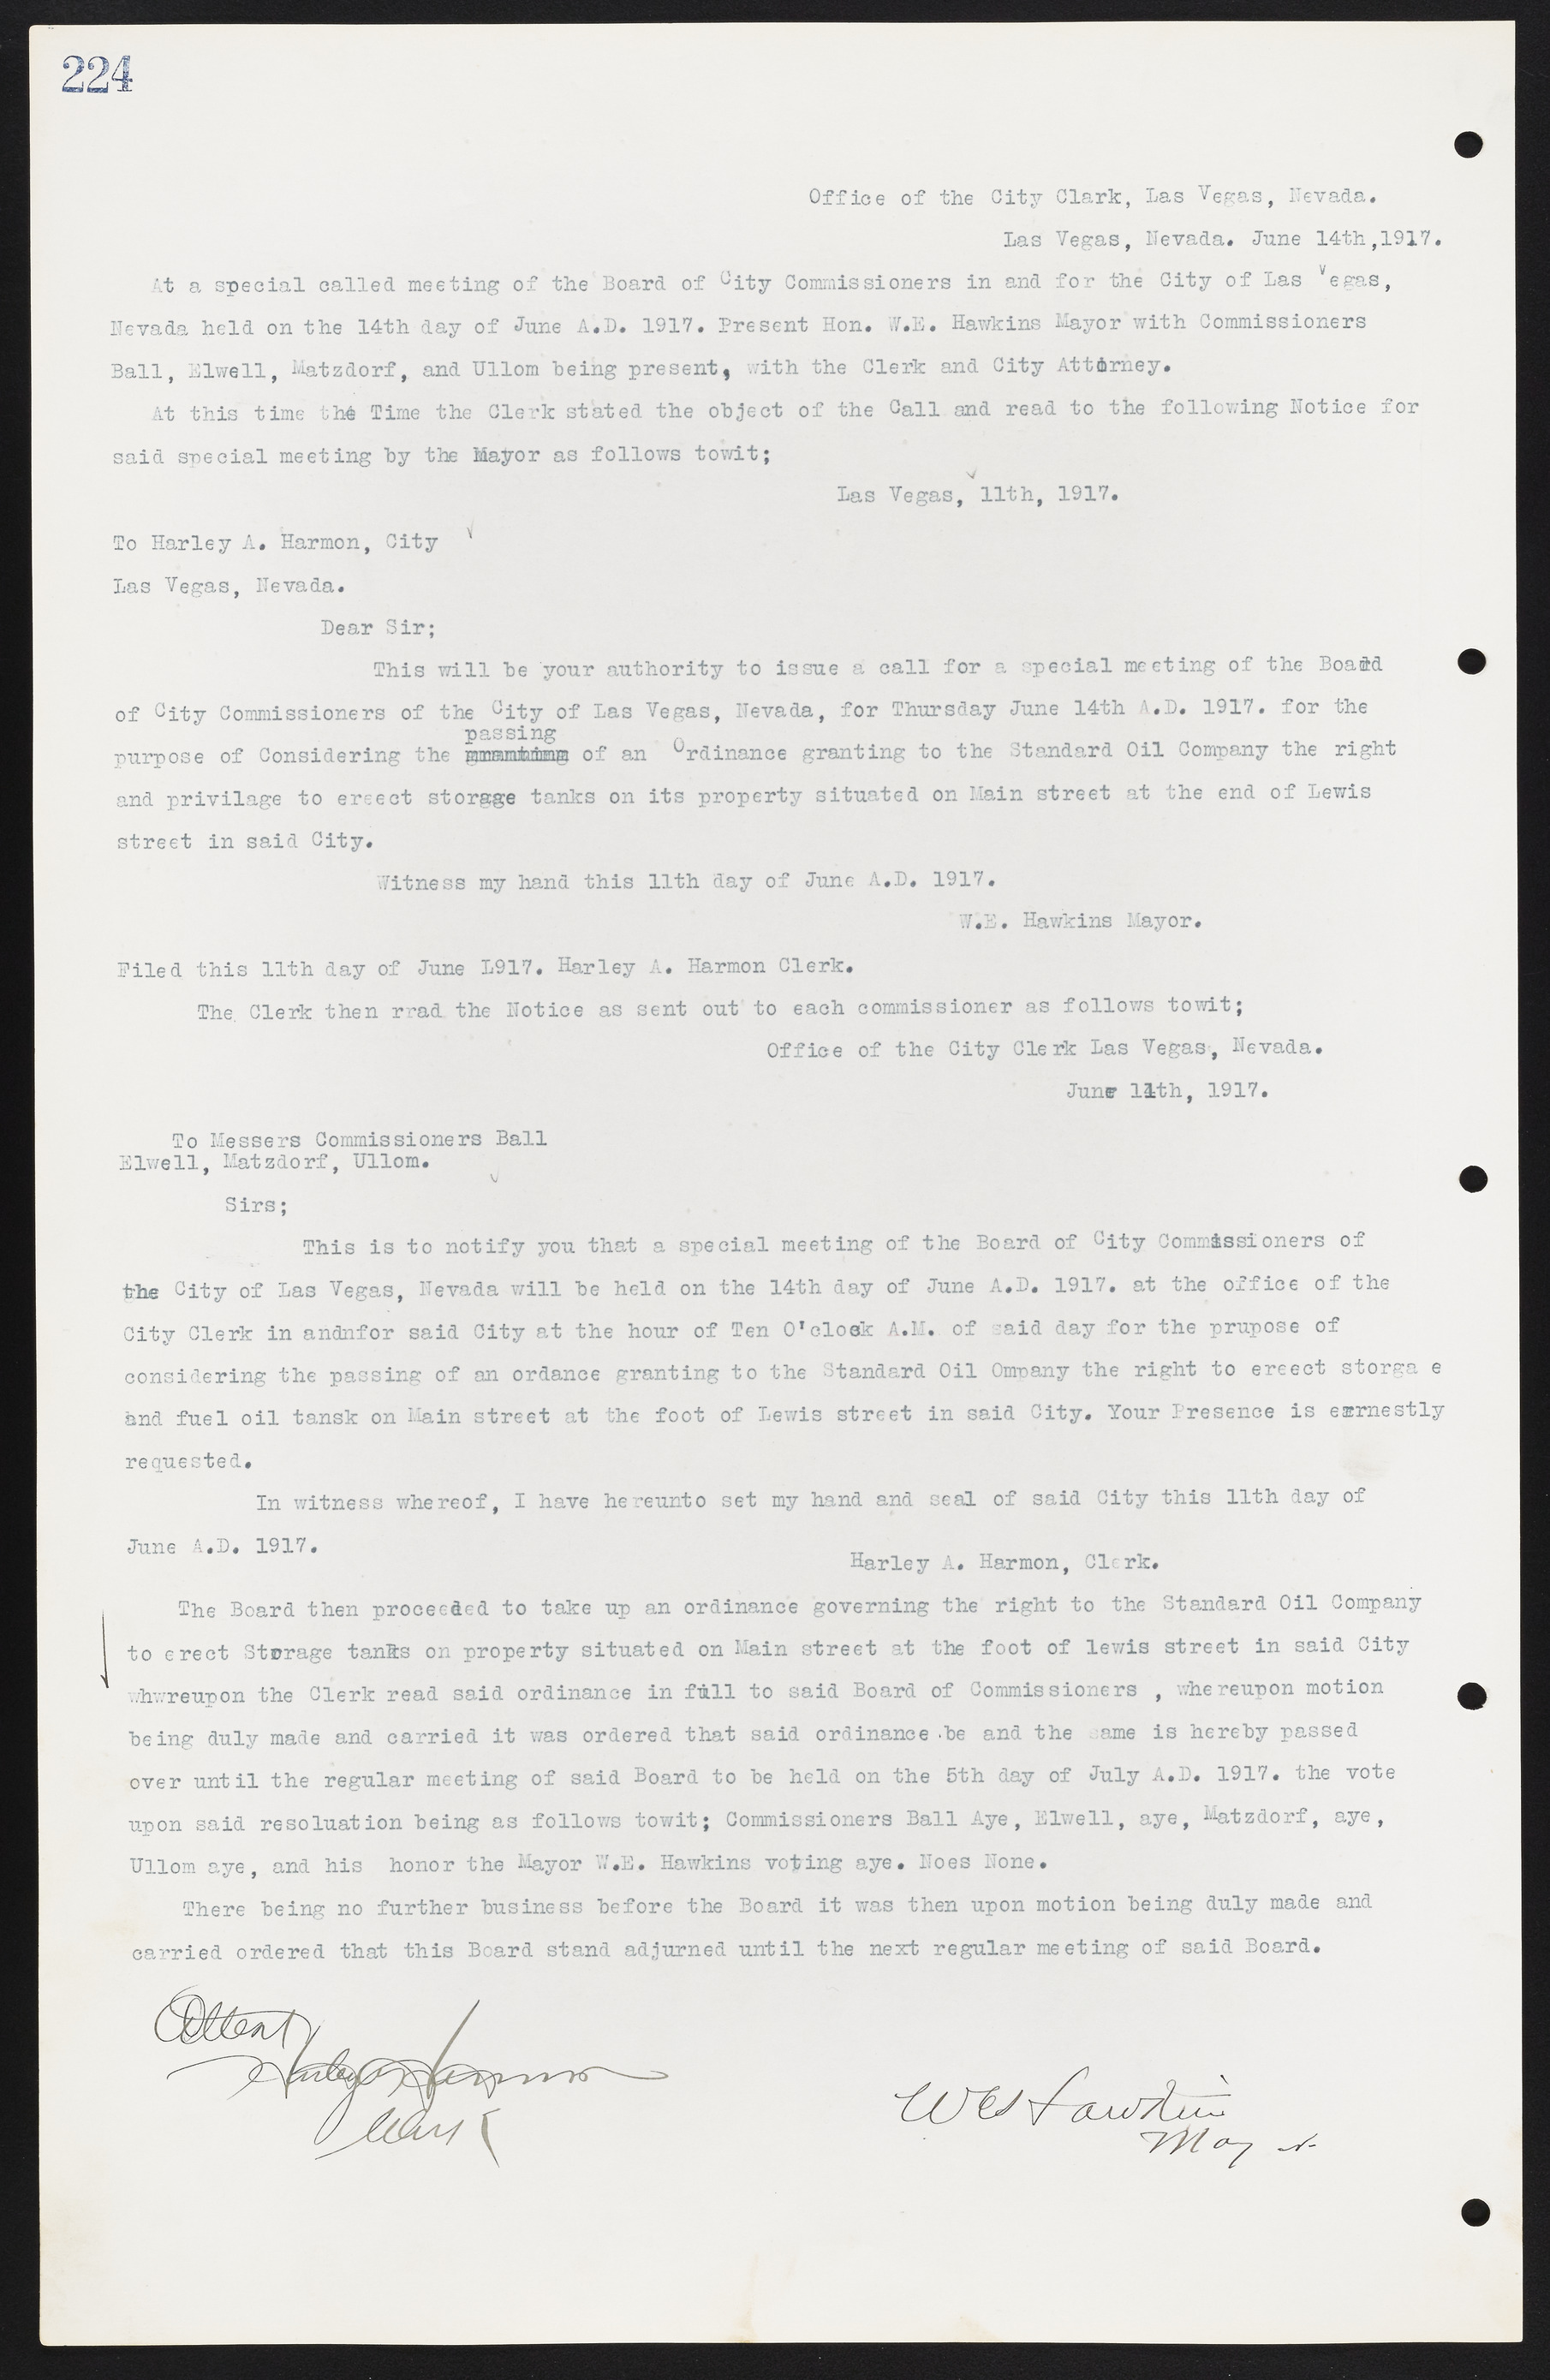 Las Vegas City Commission Minutes, June 22, 1911 to February 7, 1922, lvc000001-240